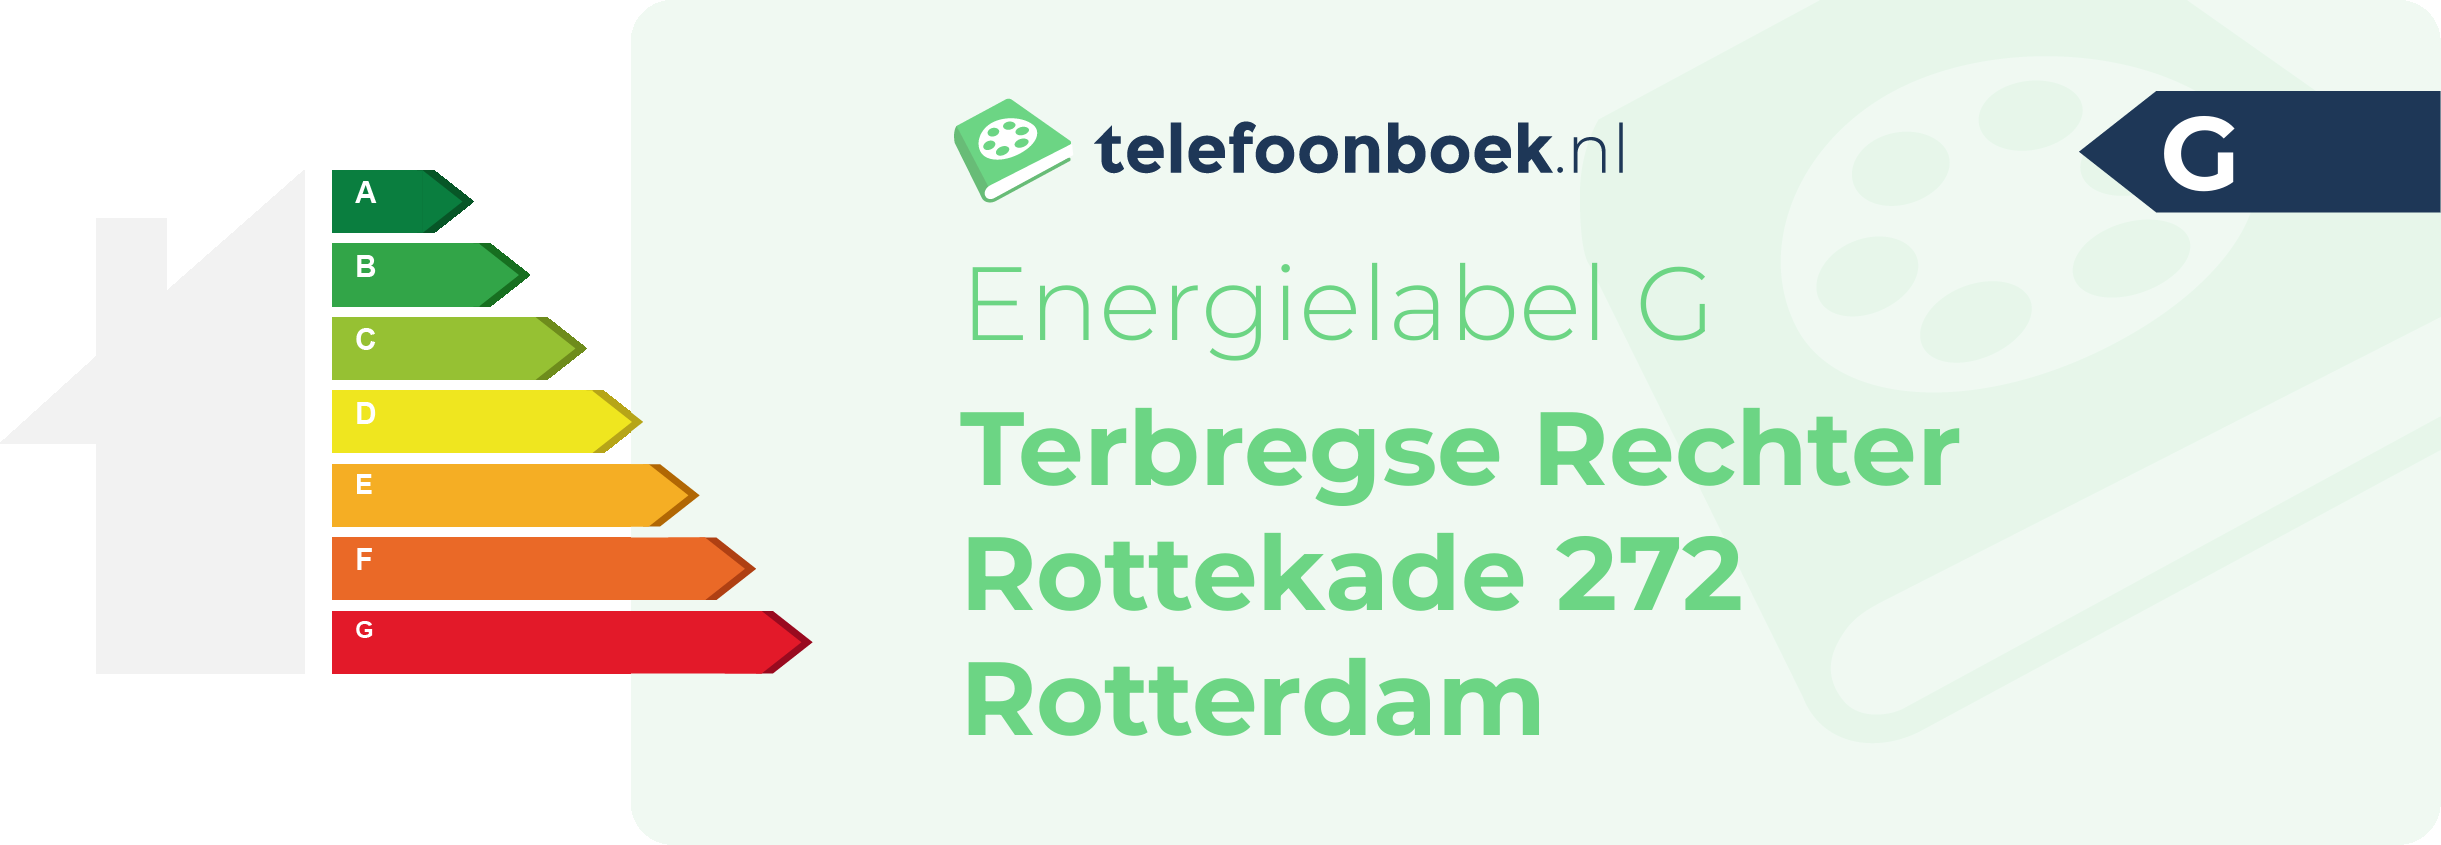 Energielabel Terbregse Rechter Rottekade 272 Rotterdam